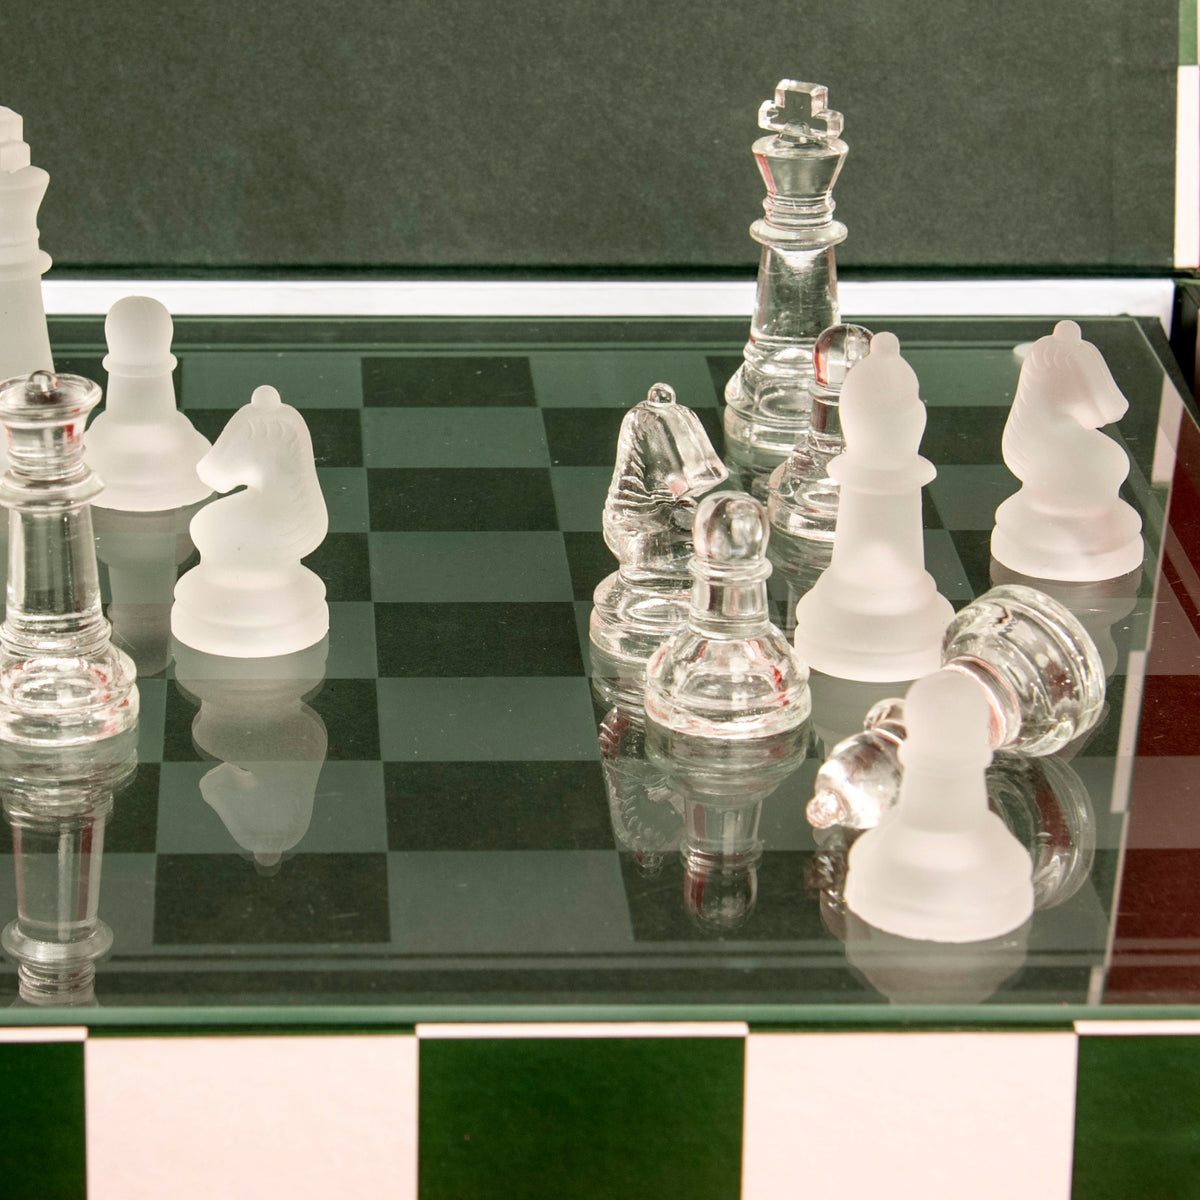 1º Intensivo de Xadrez - Chess24 Português